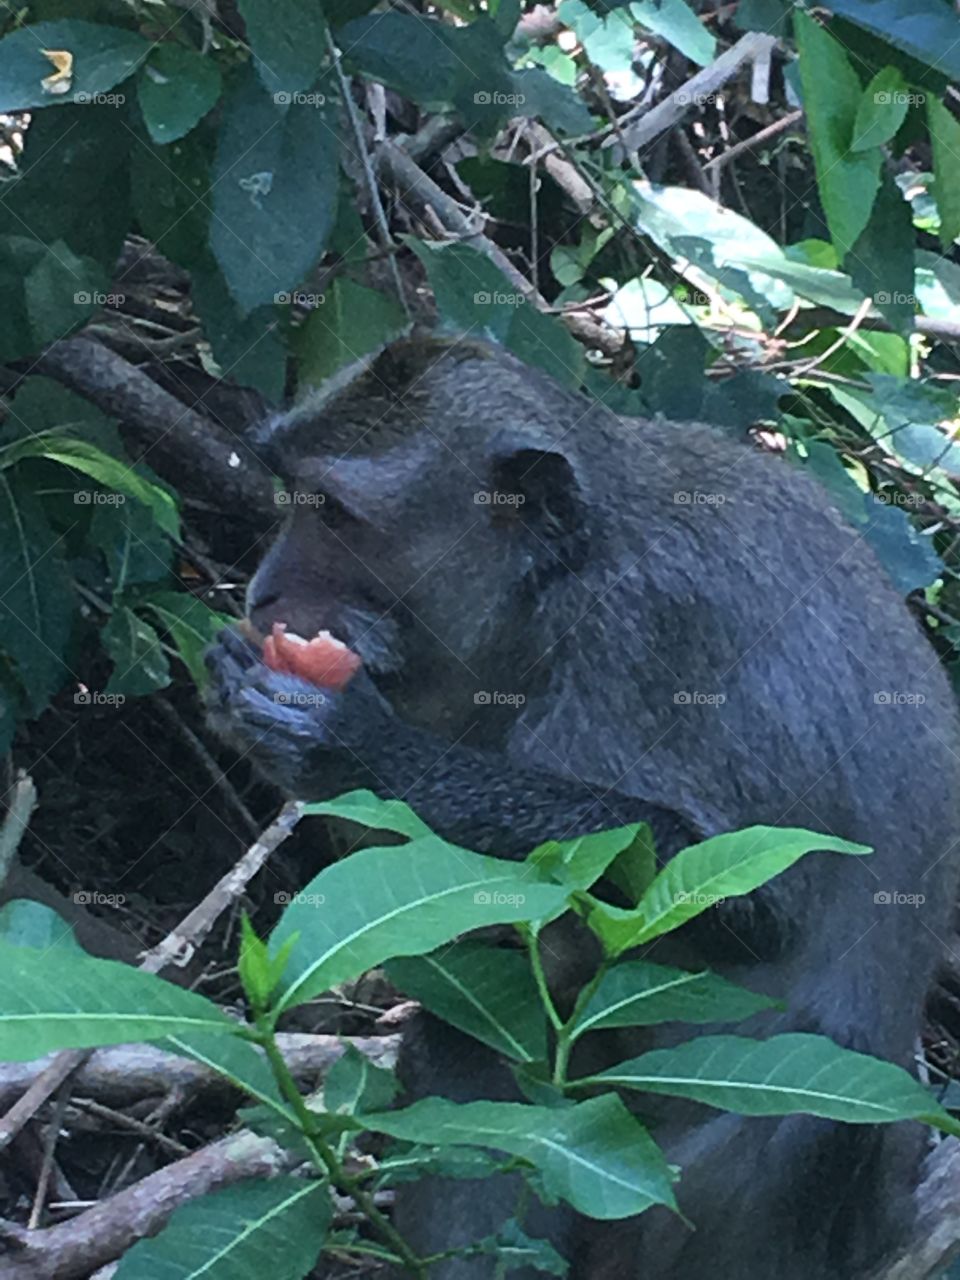 Monkey eating Apple in Bali